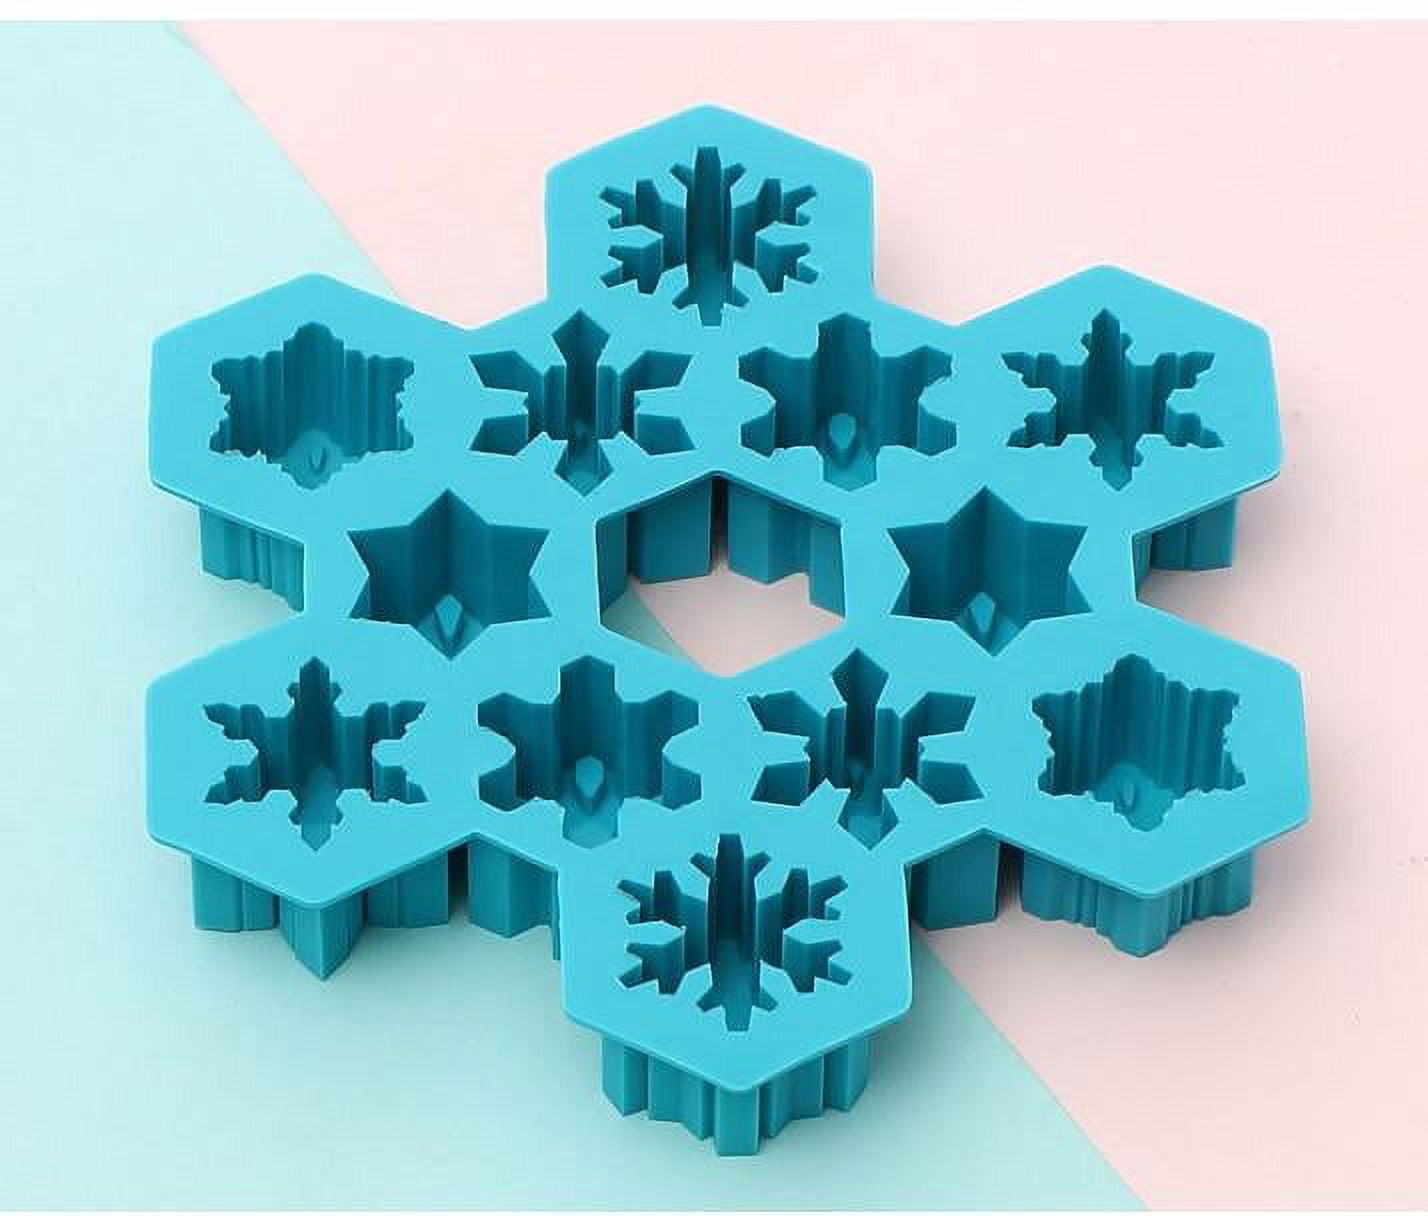 Sdjma Snowflake Silicone Ice Cube Tray, Novelty Ice Mold, Large Ice Cube Mold, Makes 12 Ice Cubes, Snow Ice Tray, Pink